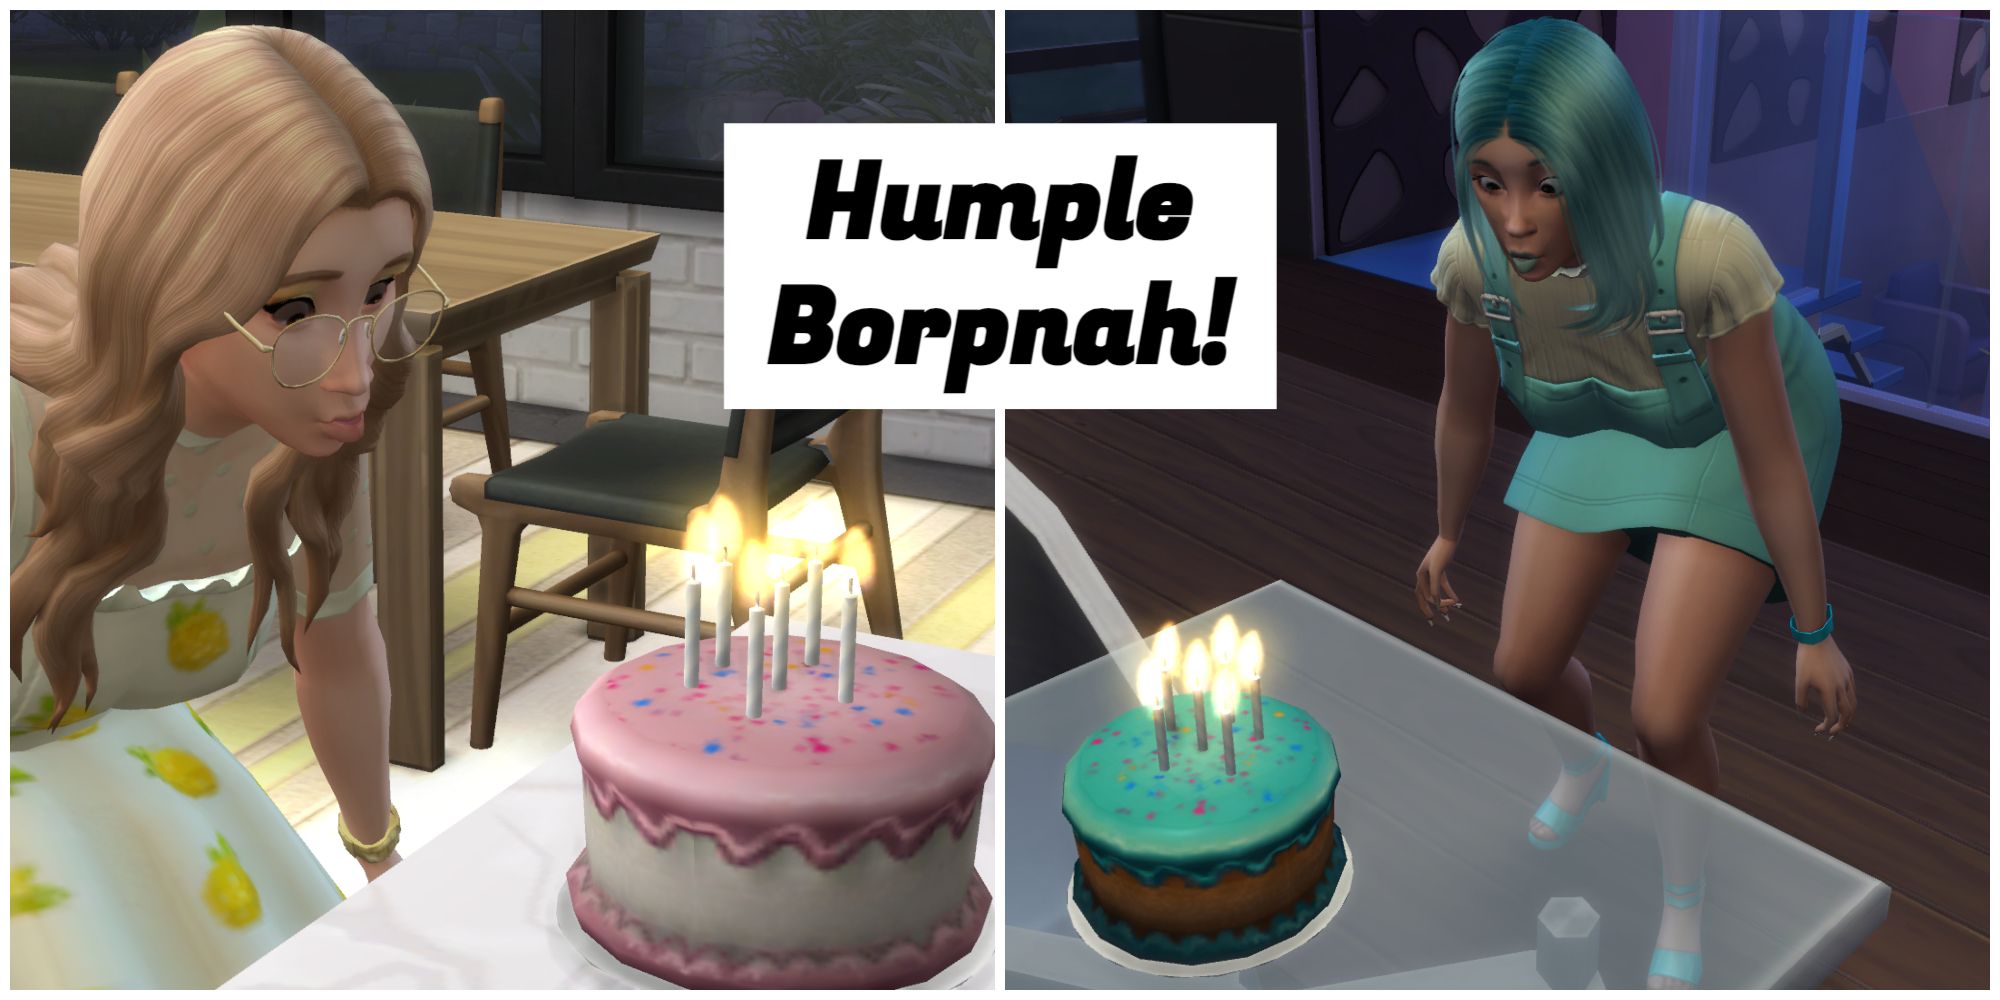 Sims sing Humple Borpnah in Simlish on their birthdays